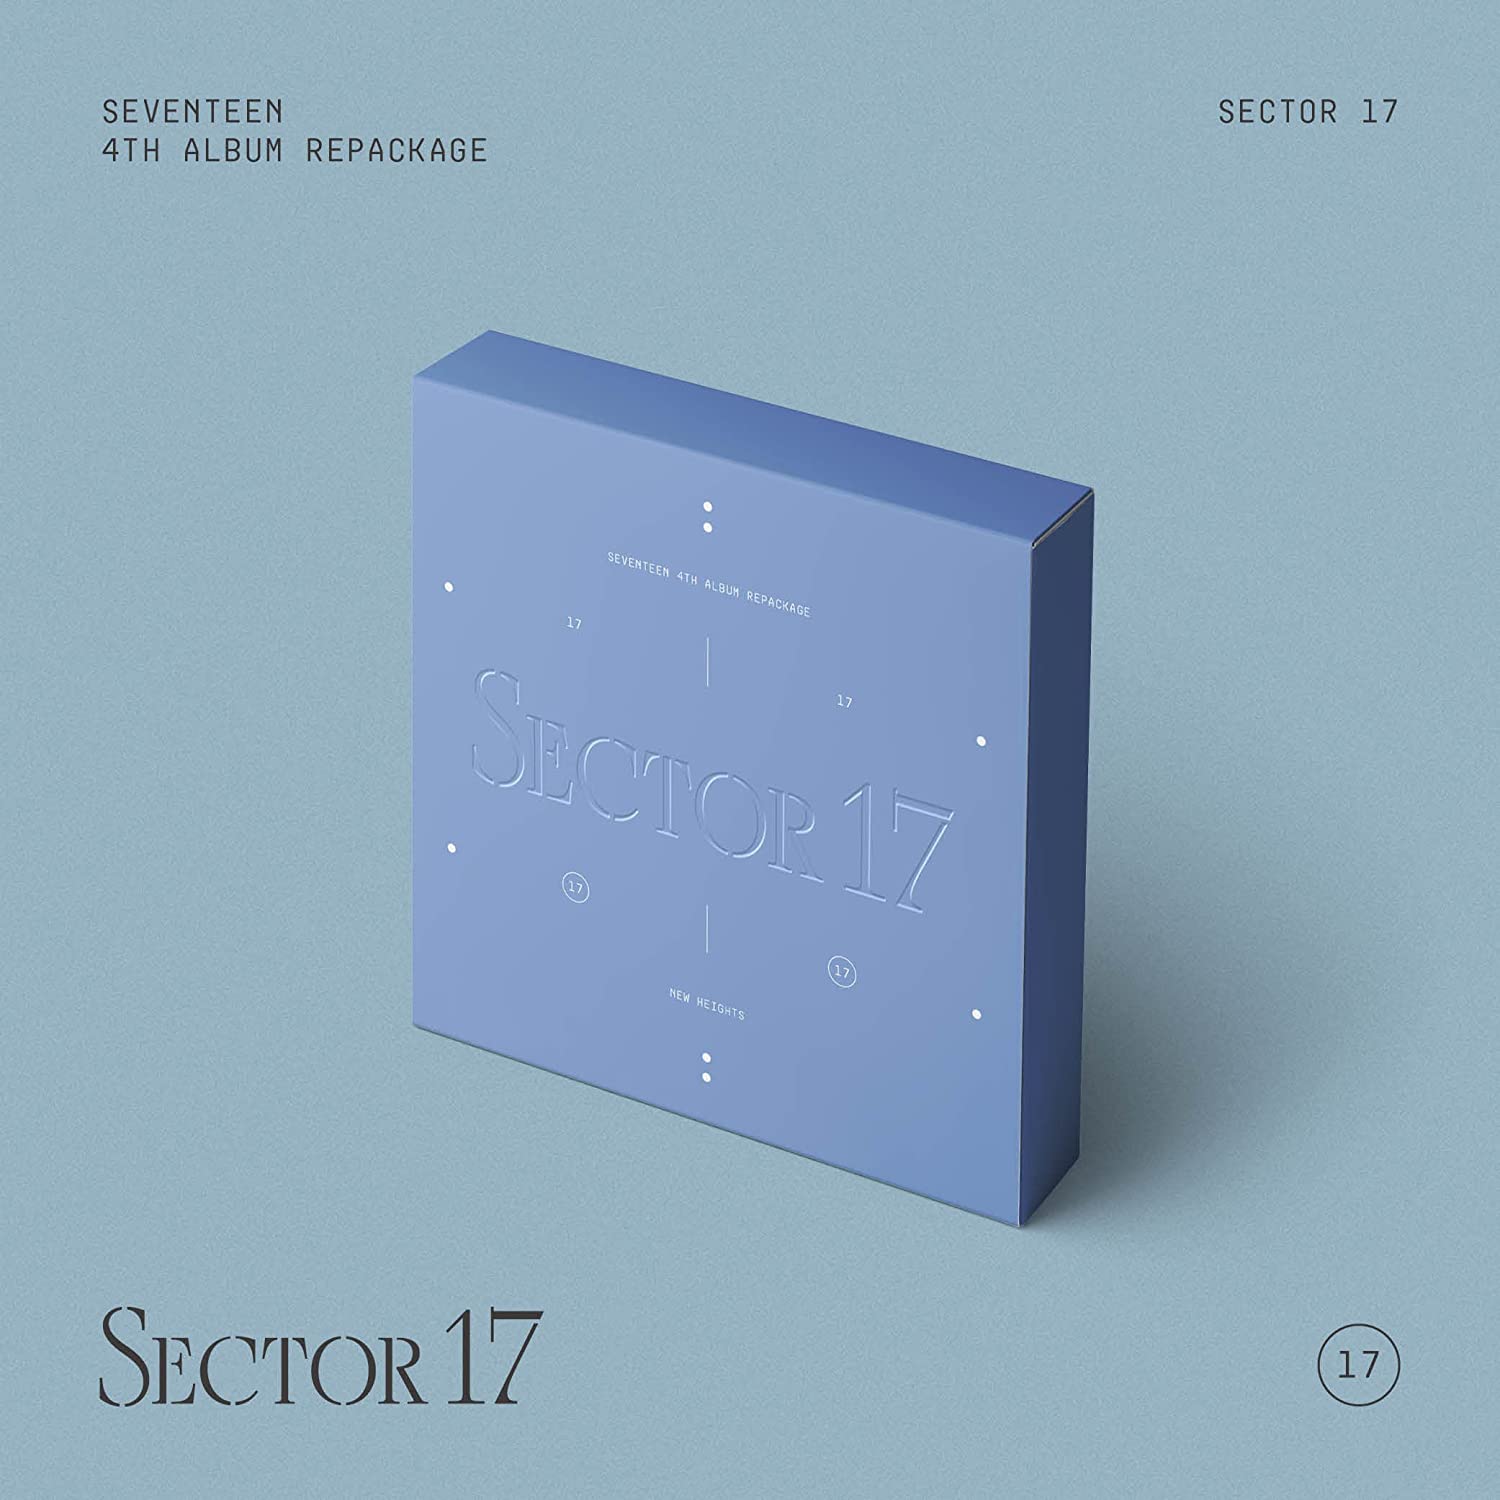 Seventeen 4th Album Repackage - Sector 17 | Seventeen